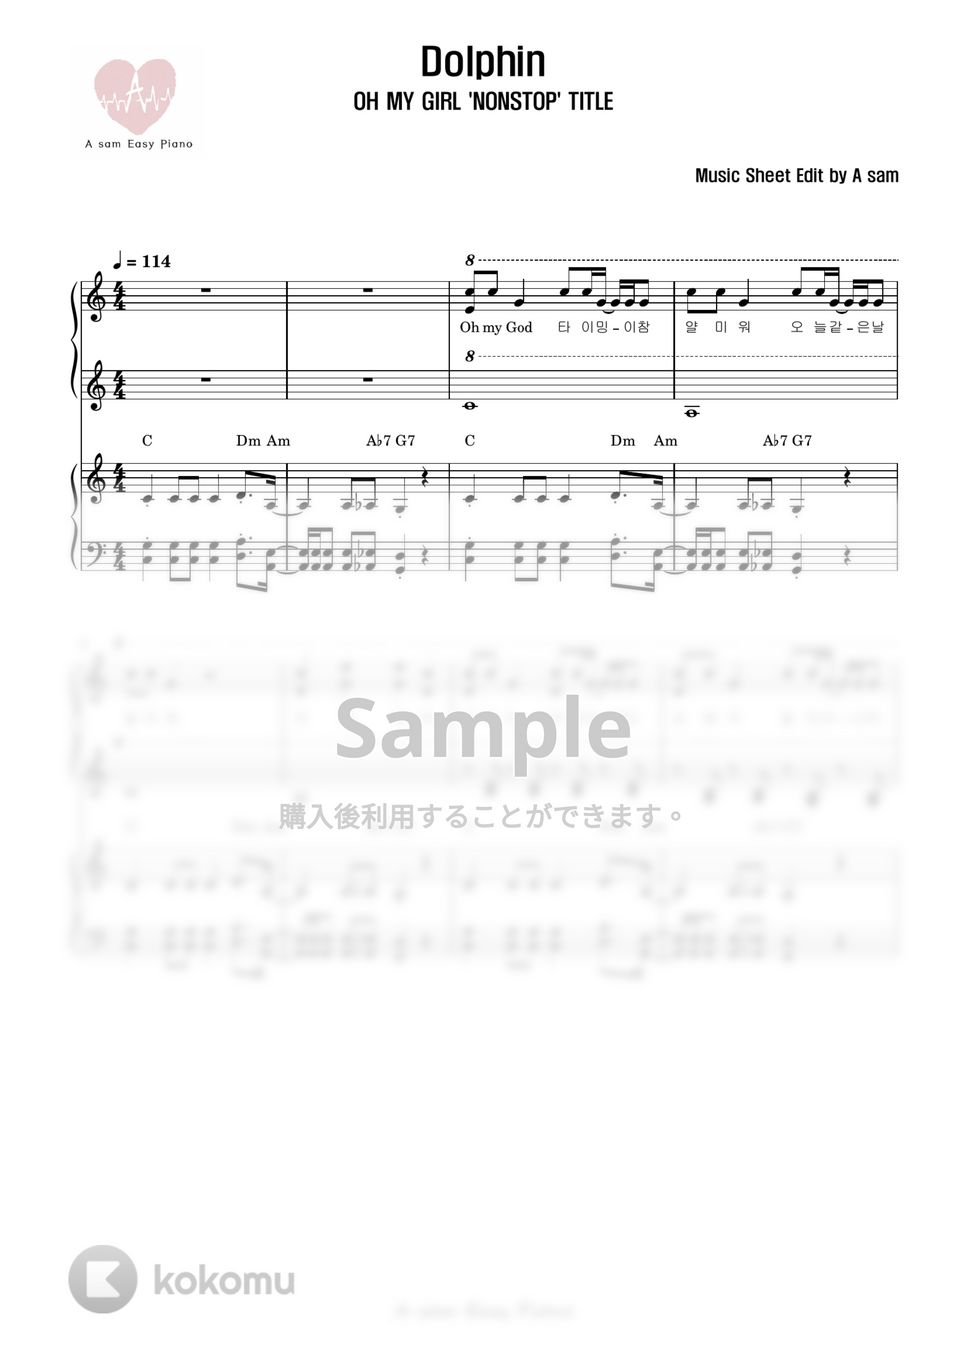 OH MY GIRL - Dolphin (ピアノ連弾 / 韓国語歌詞付き) by A-sam